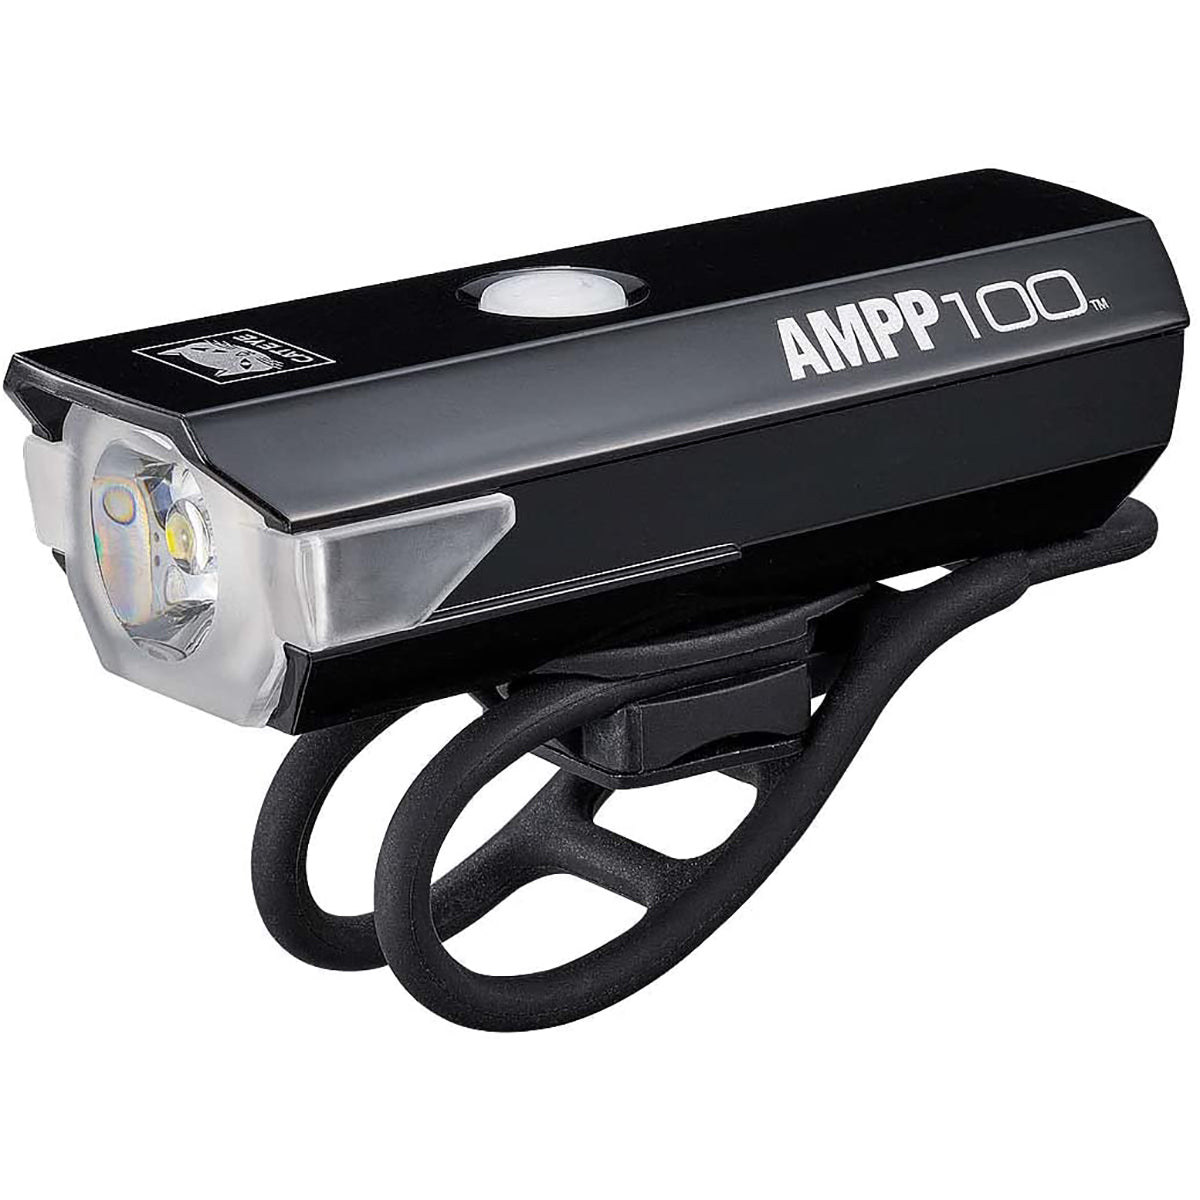 CatEye Headlight and Rear Light Combo Kit - AMPP100/ViZ100 Cateye